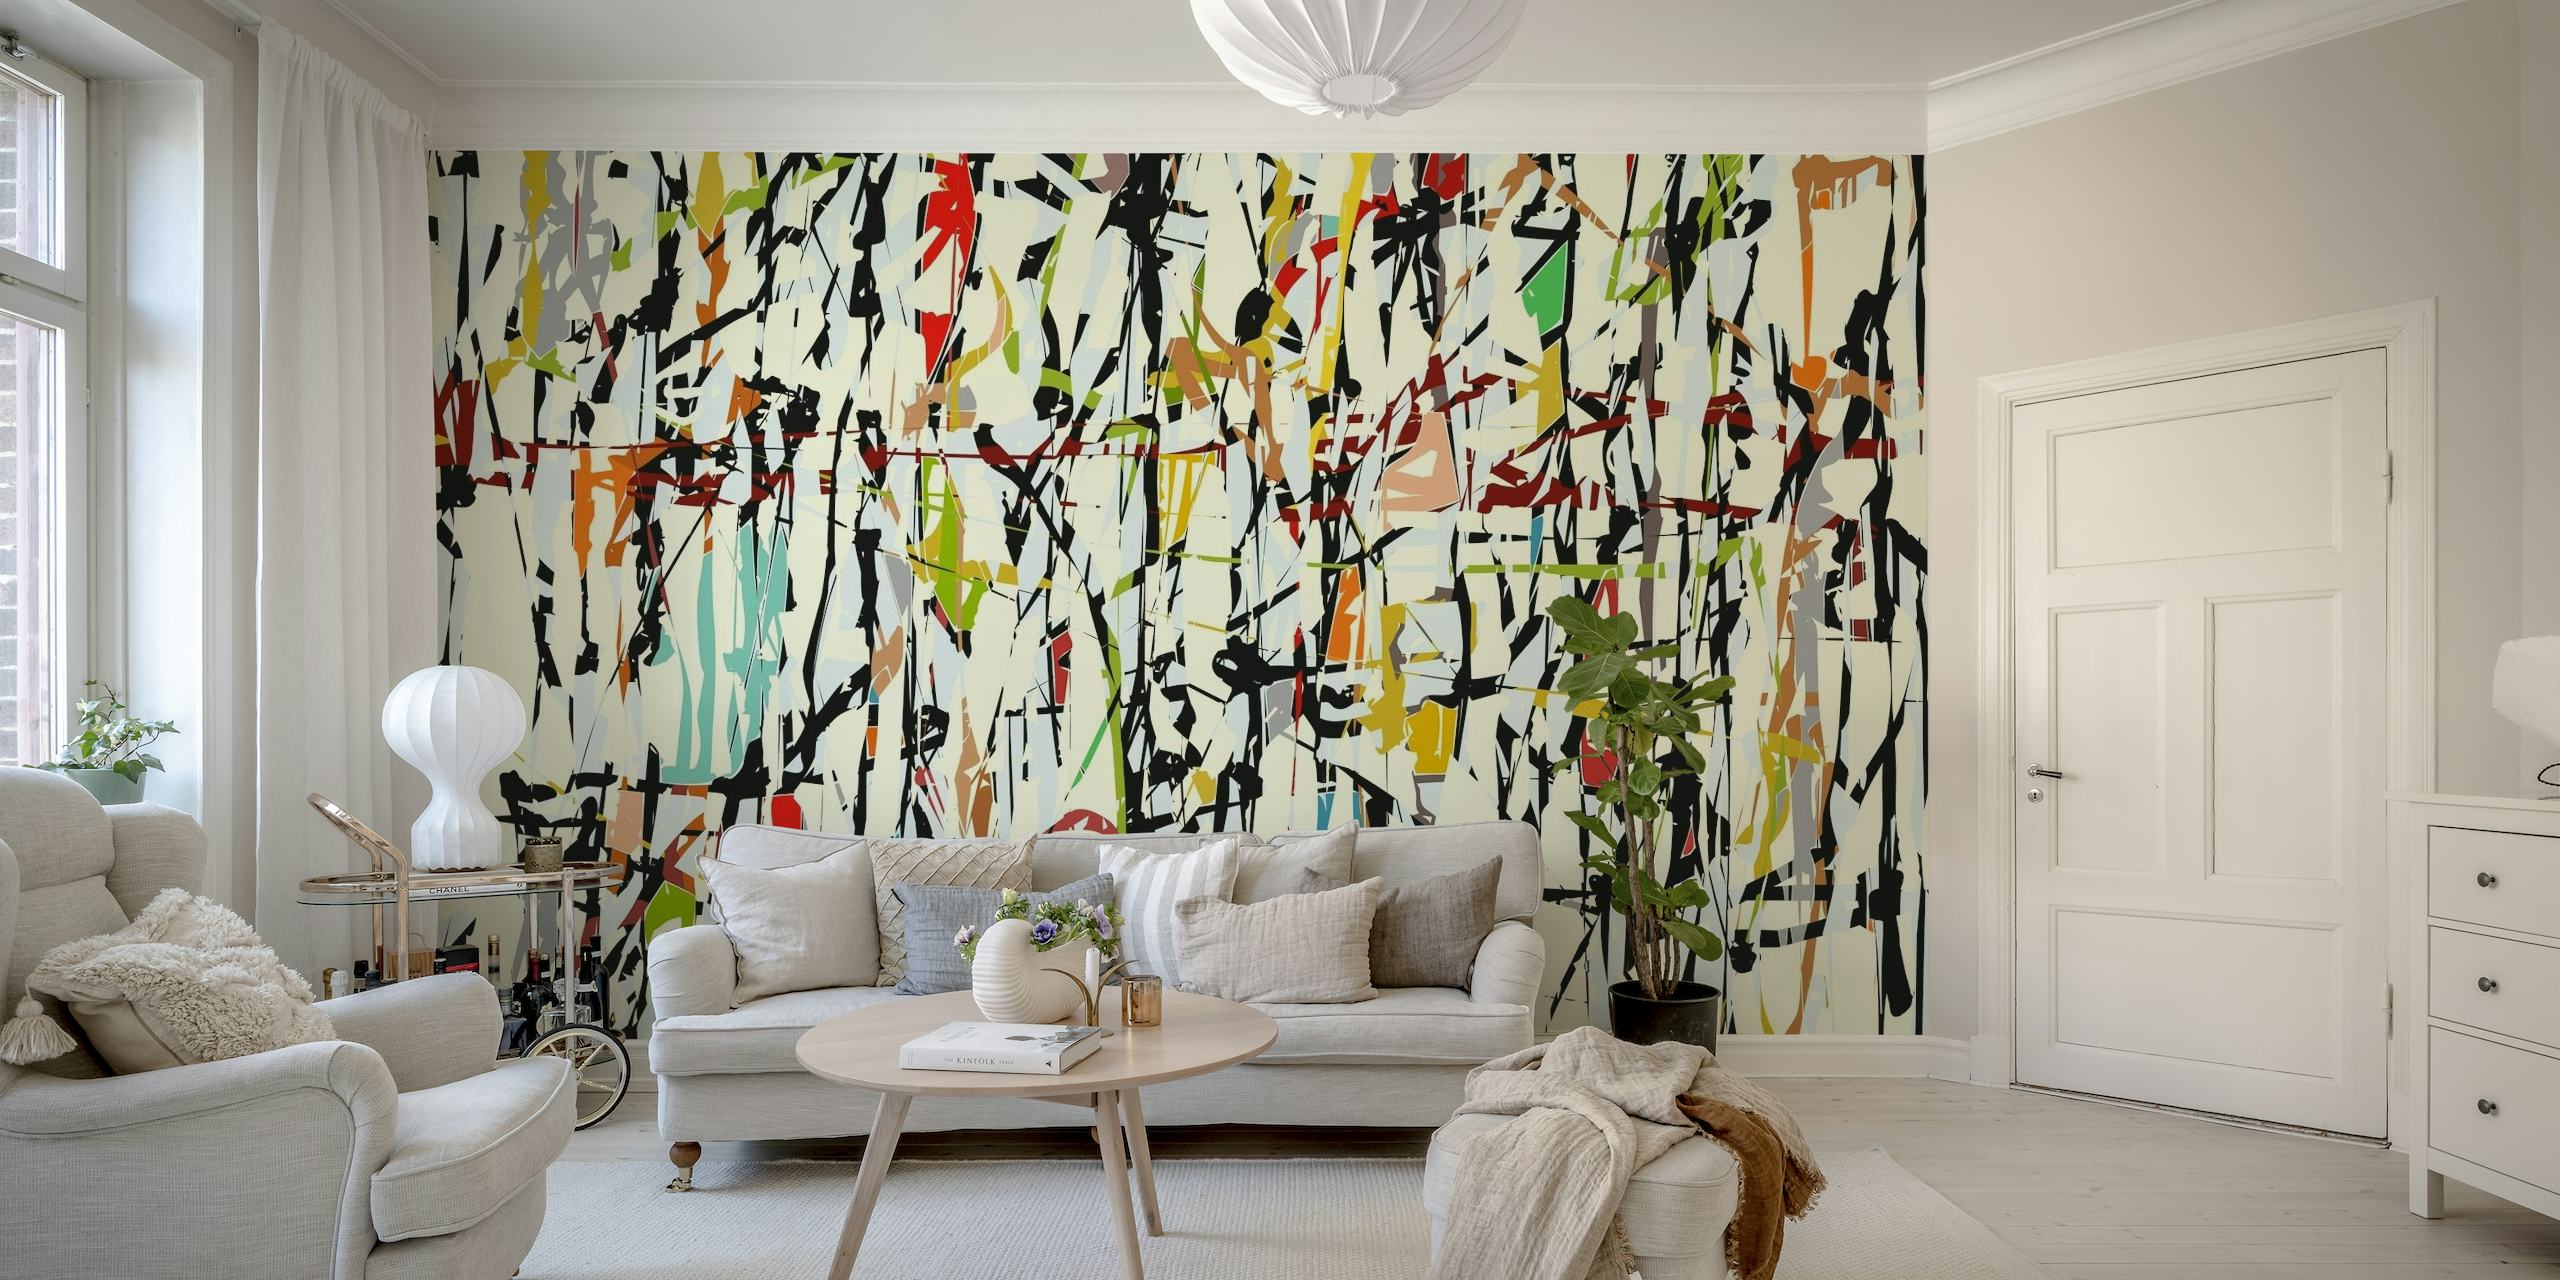 Pollock Wink 4 wallpaper